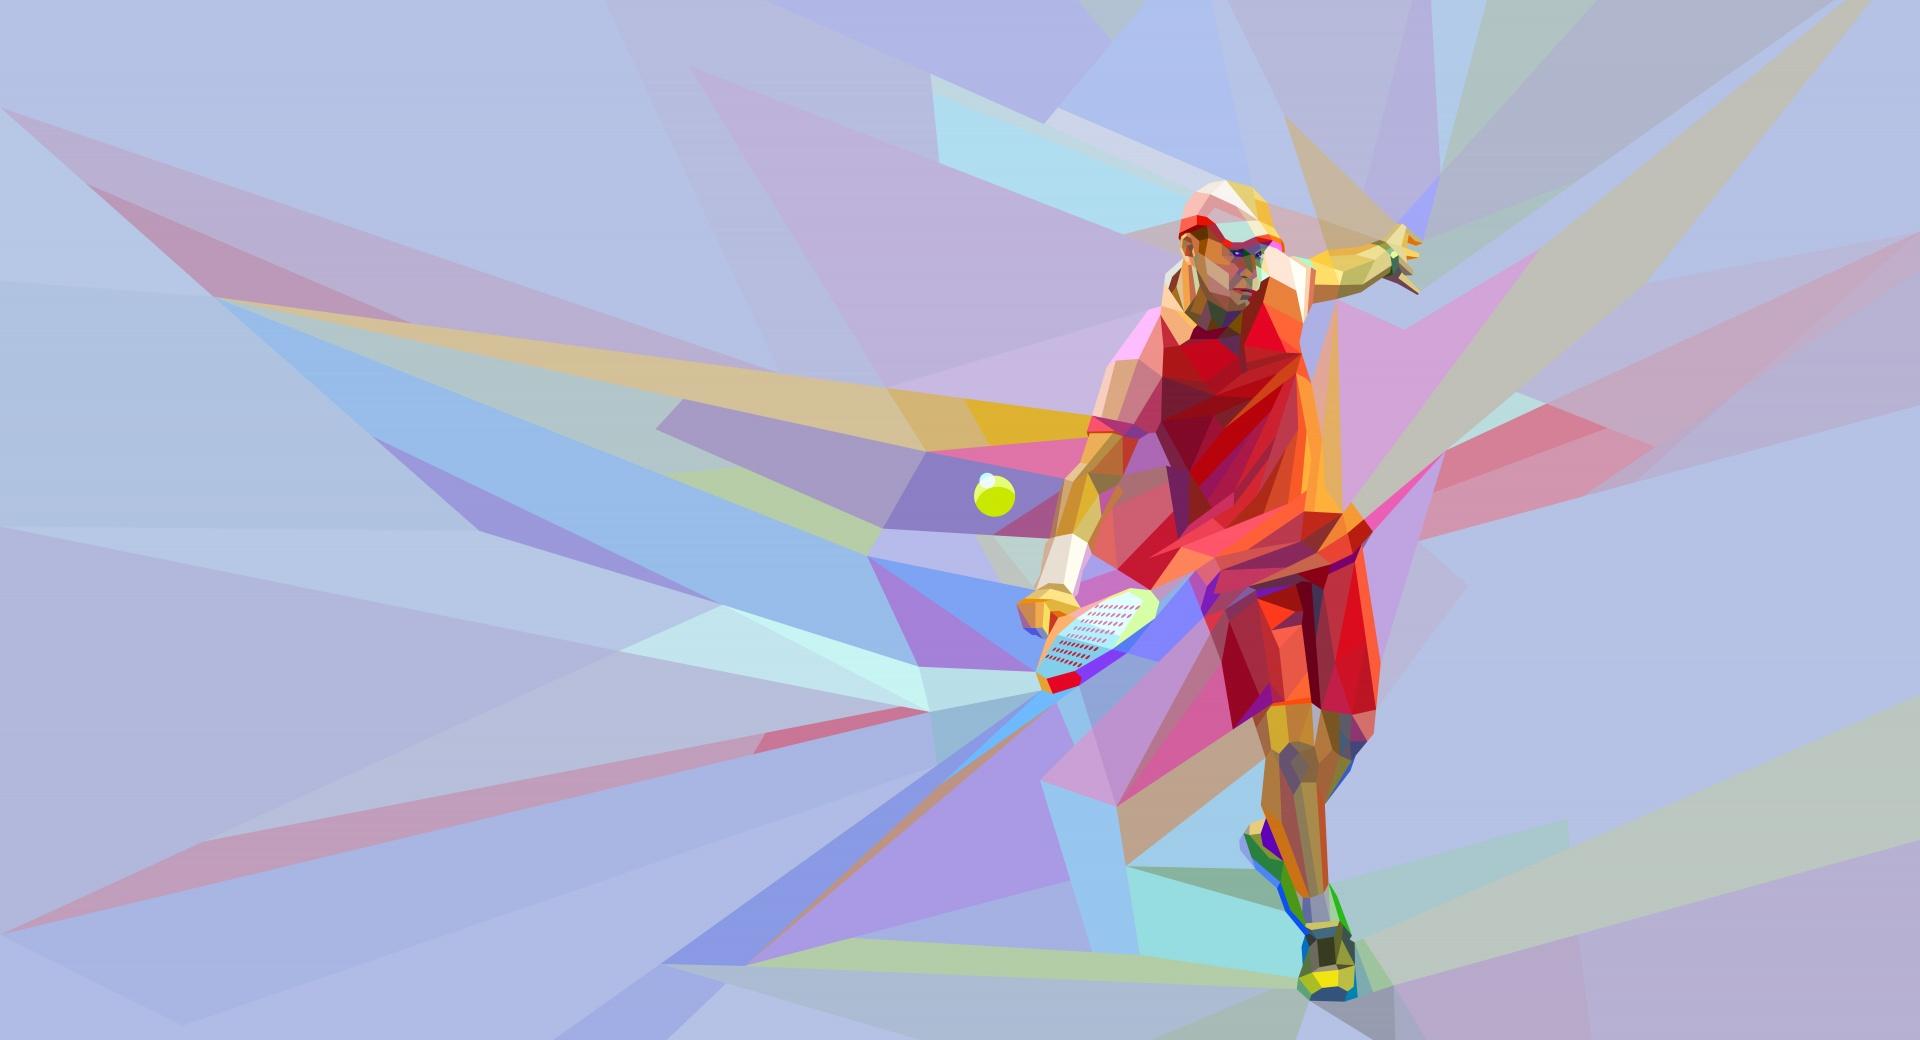 Tennis Player Polygon Art wallpapers HD quality